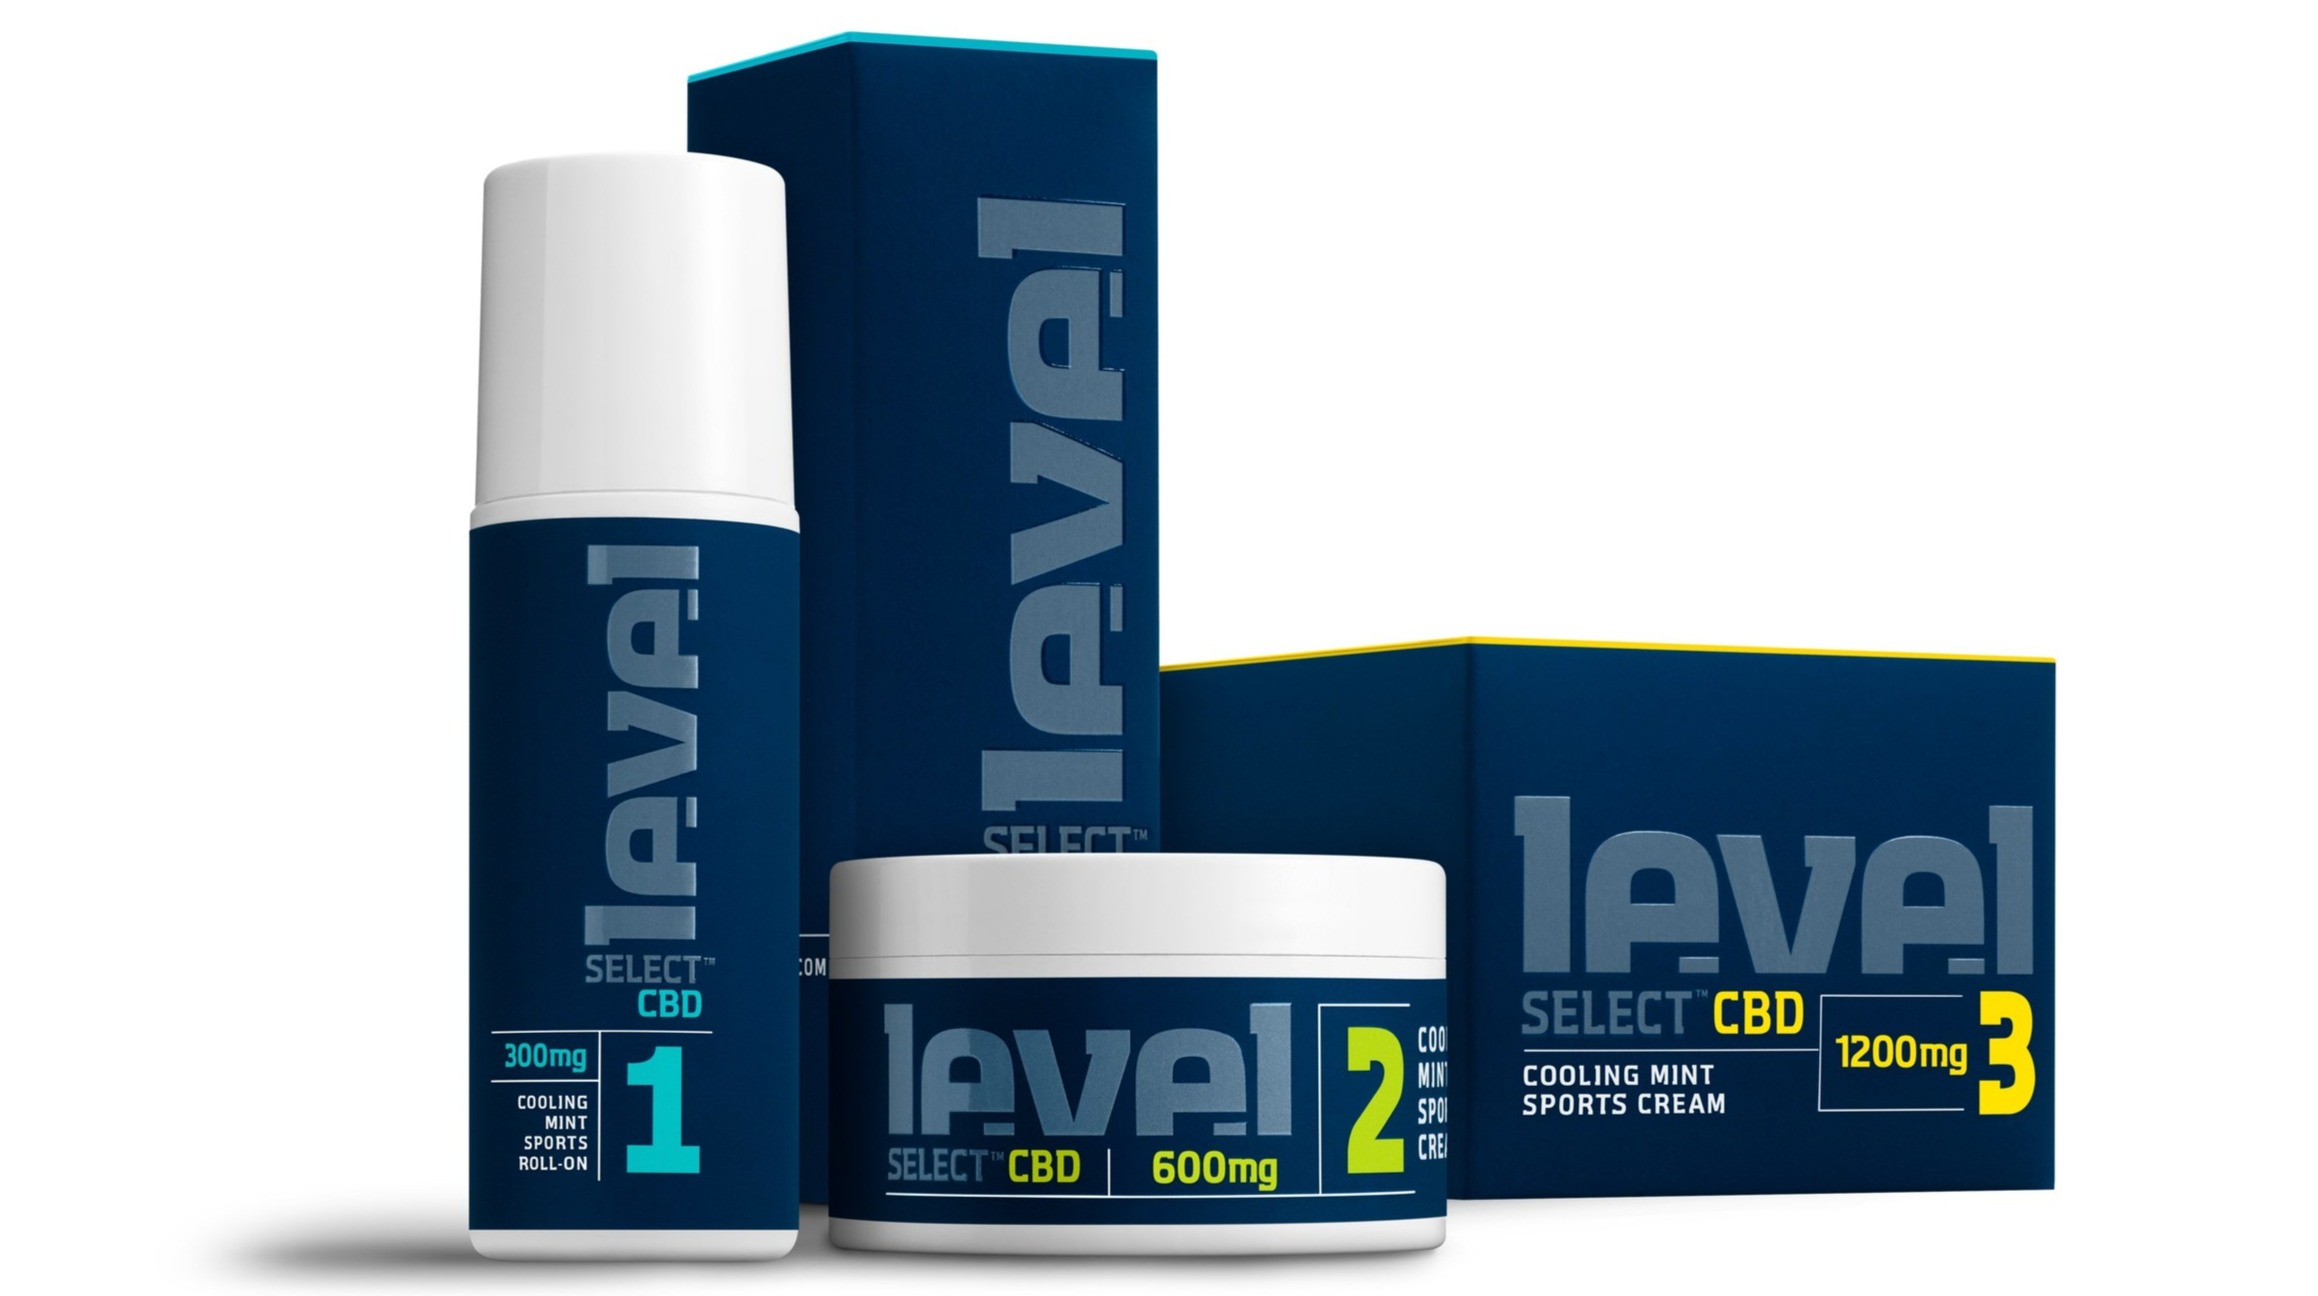 Baseball legend Steve Garvey backs Level Select CBD products as